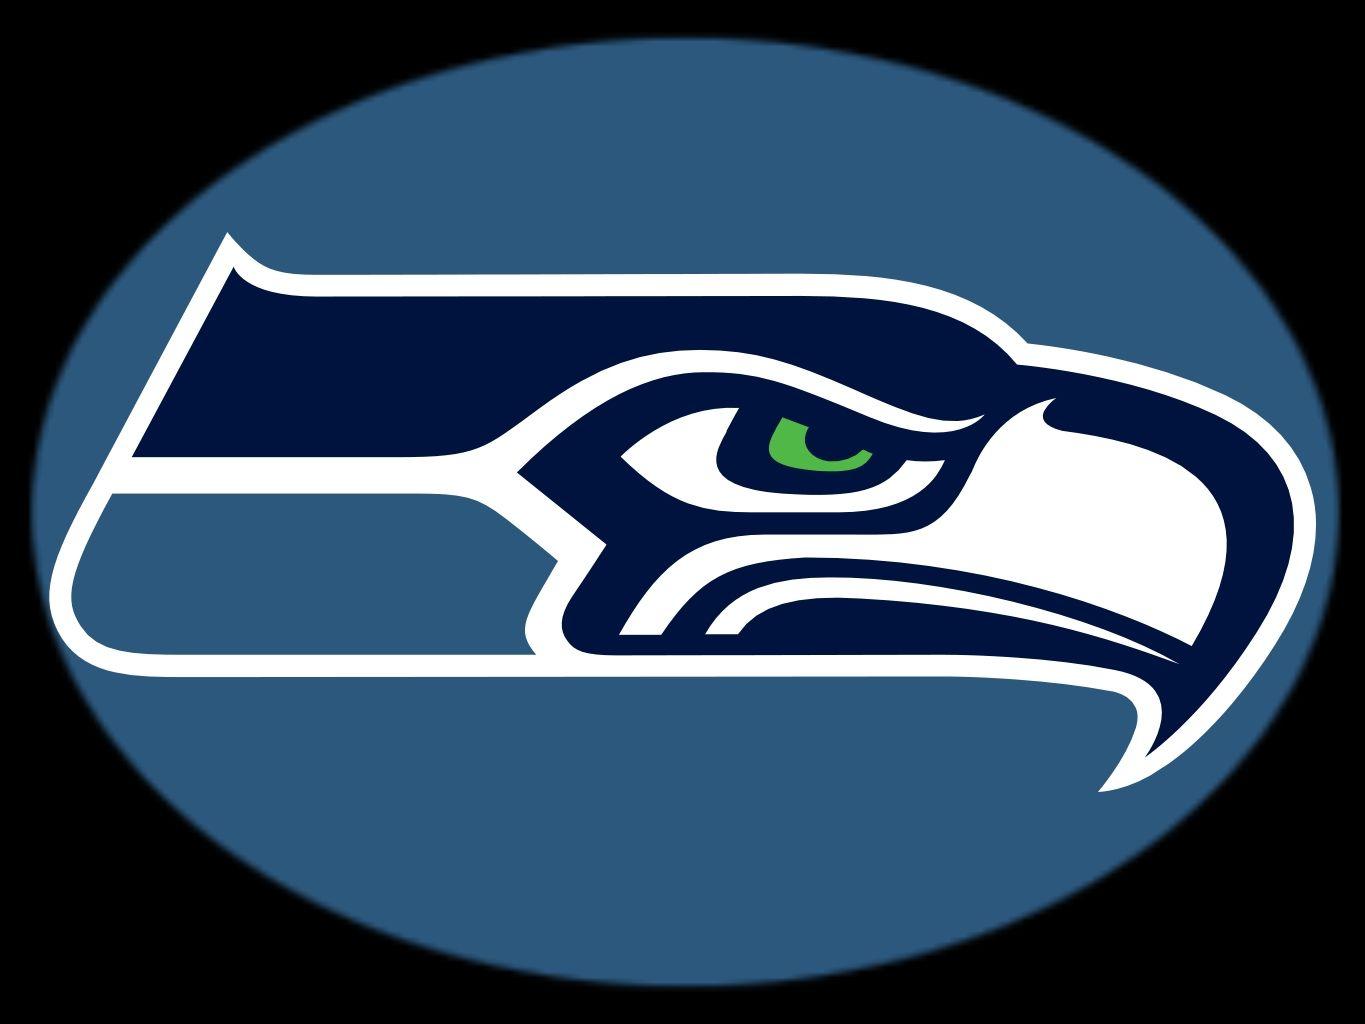 seahawks logo image. Seattle Seahawks. logos